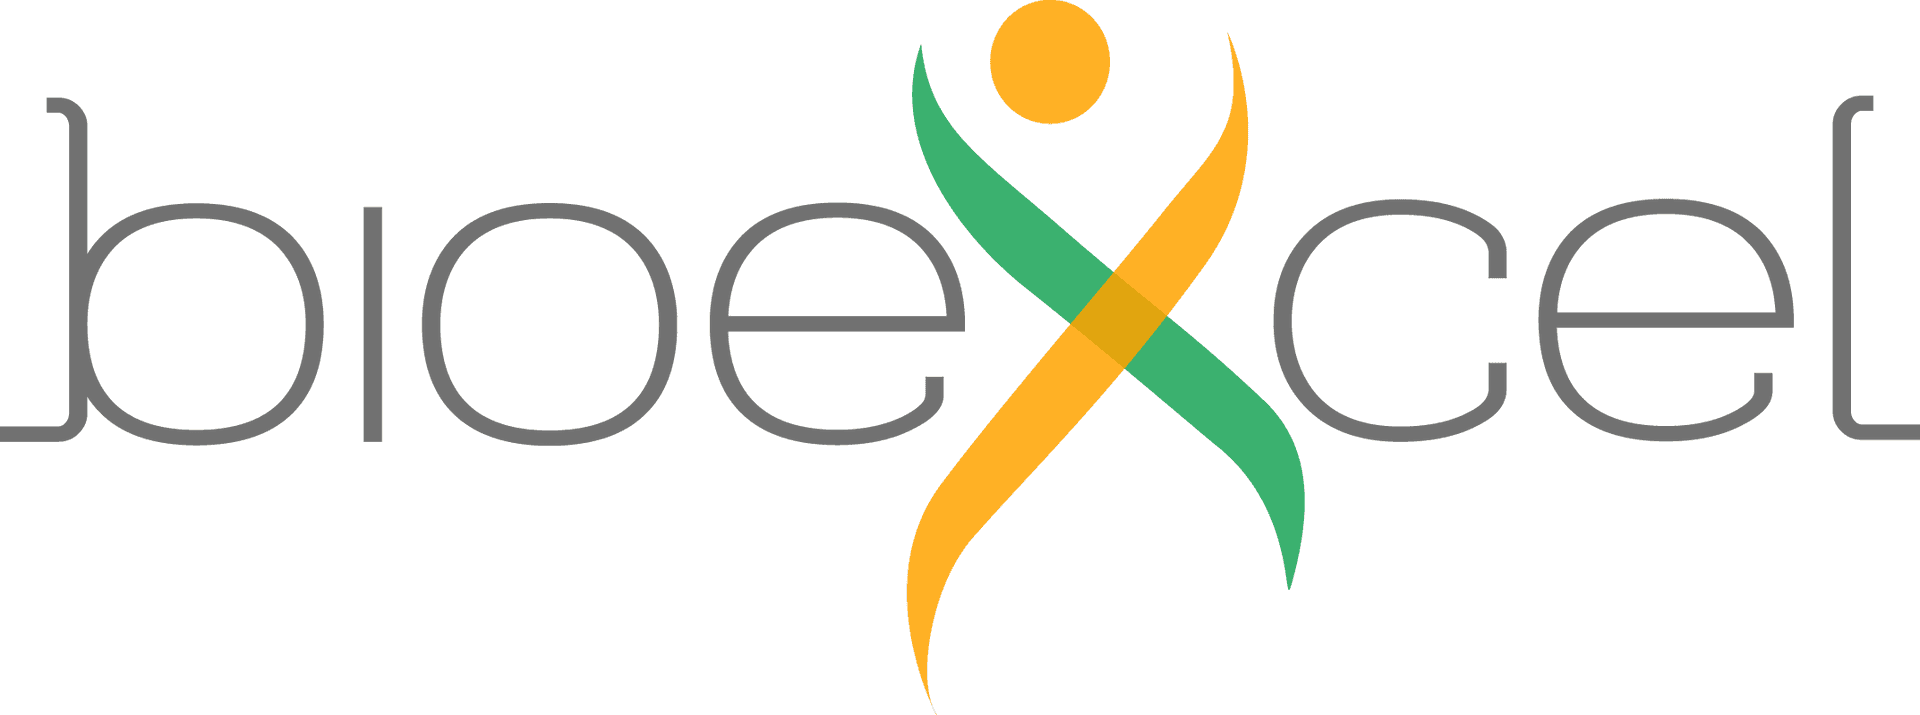 Bio Excel Logo Design PNG